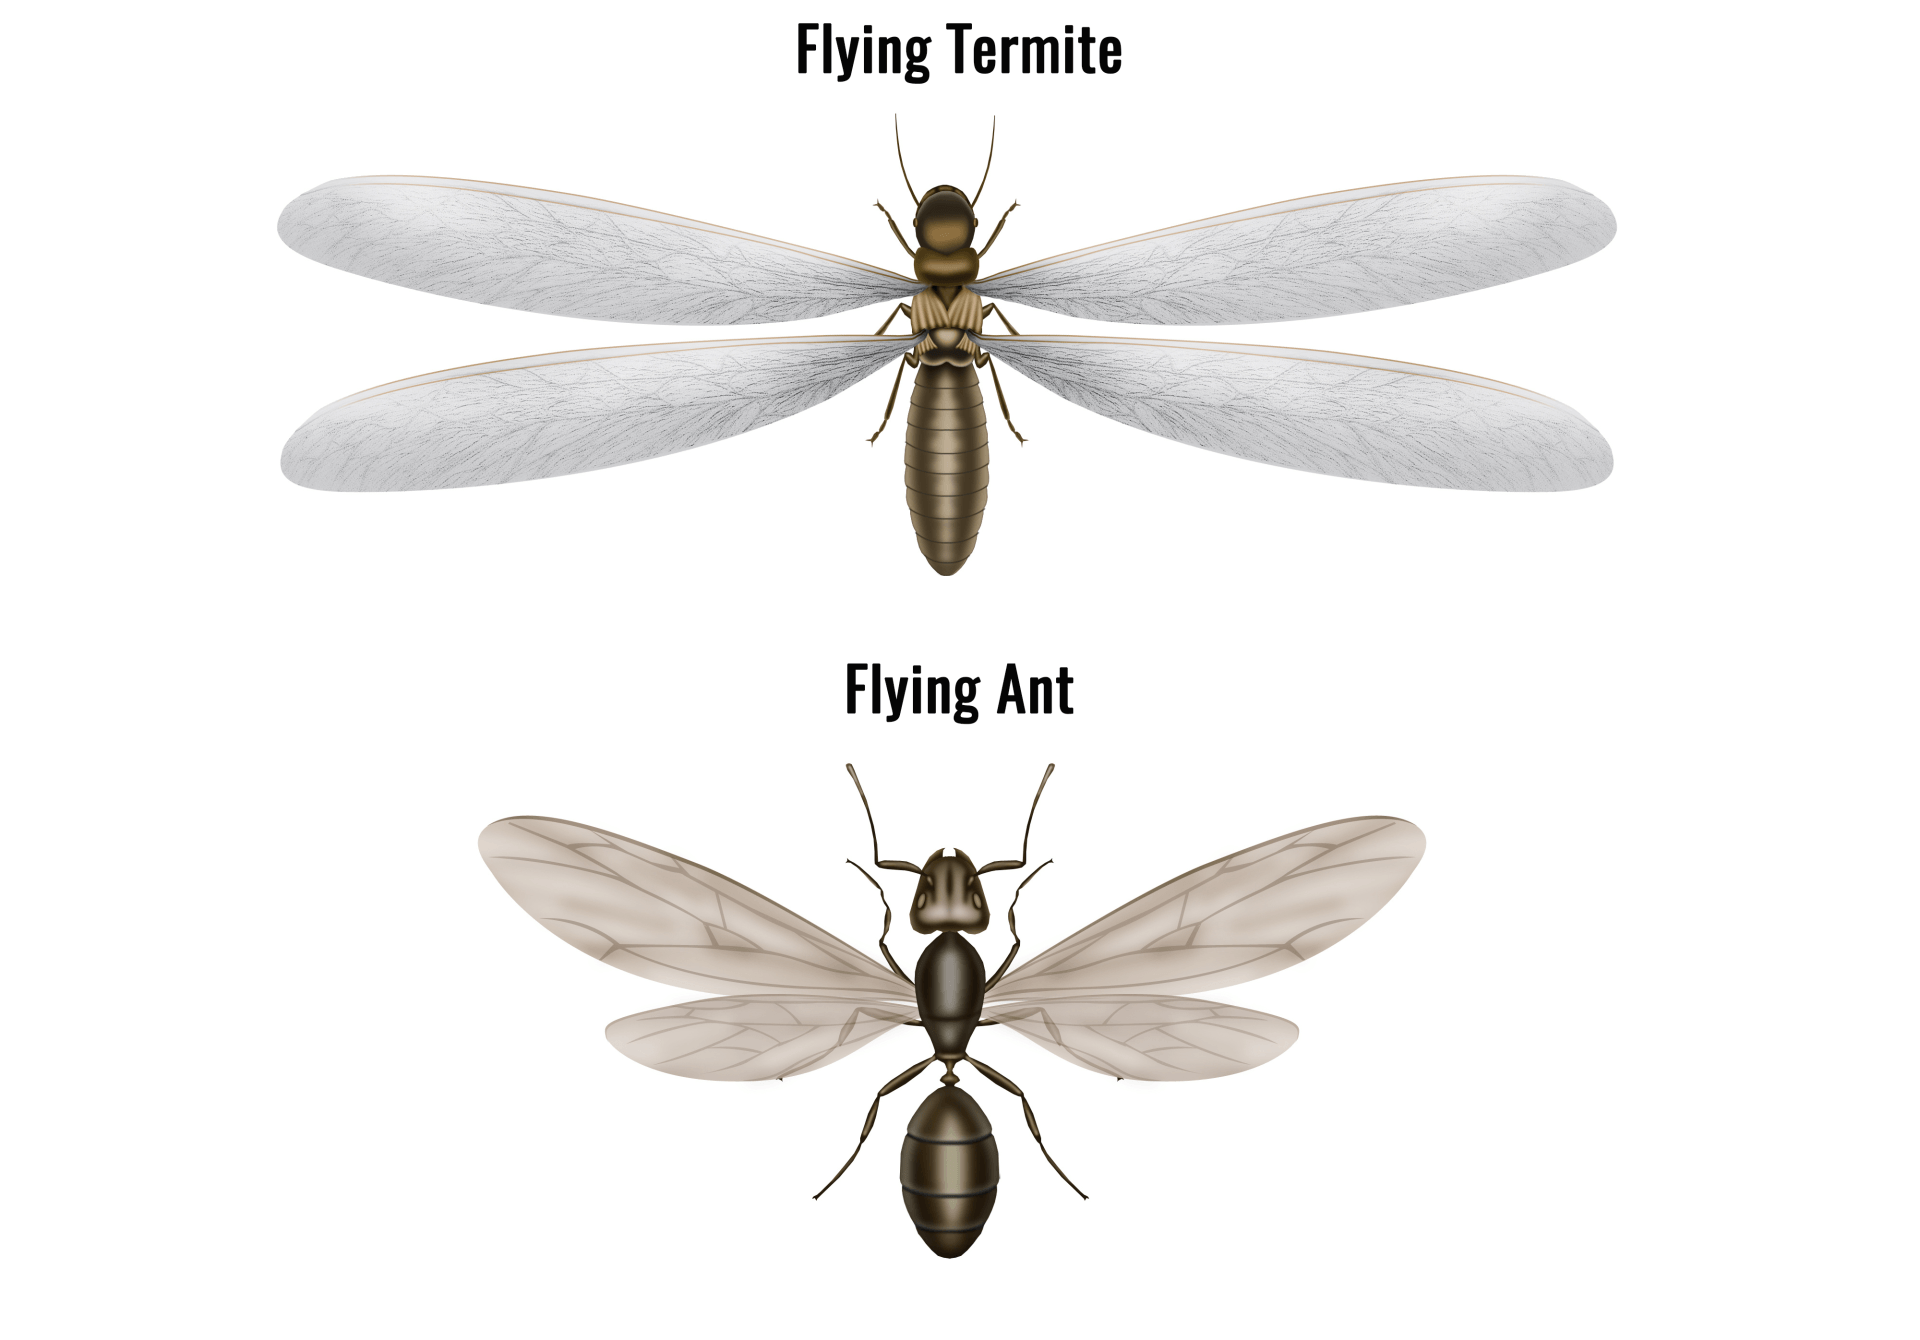 Ant vs Termite